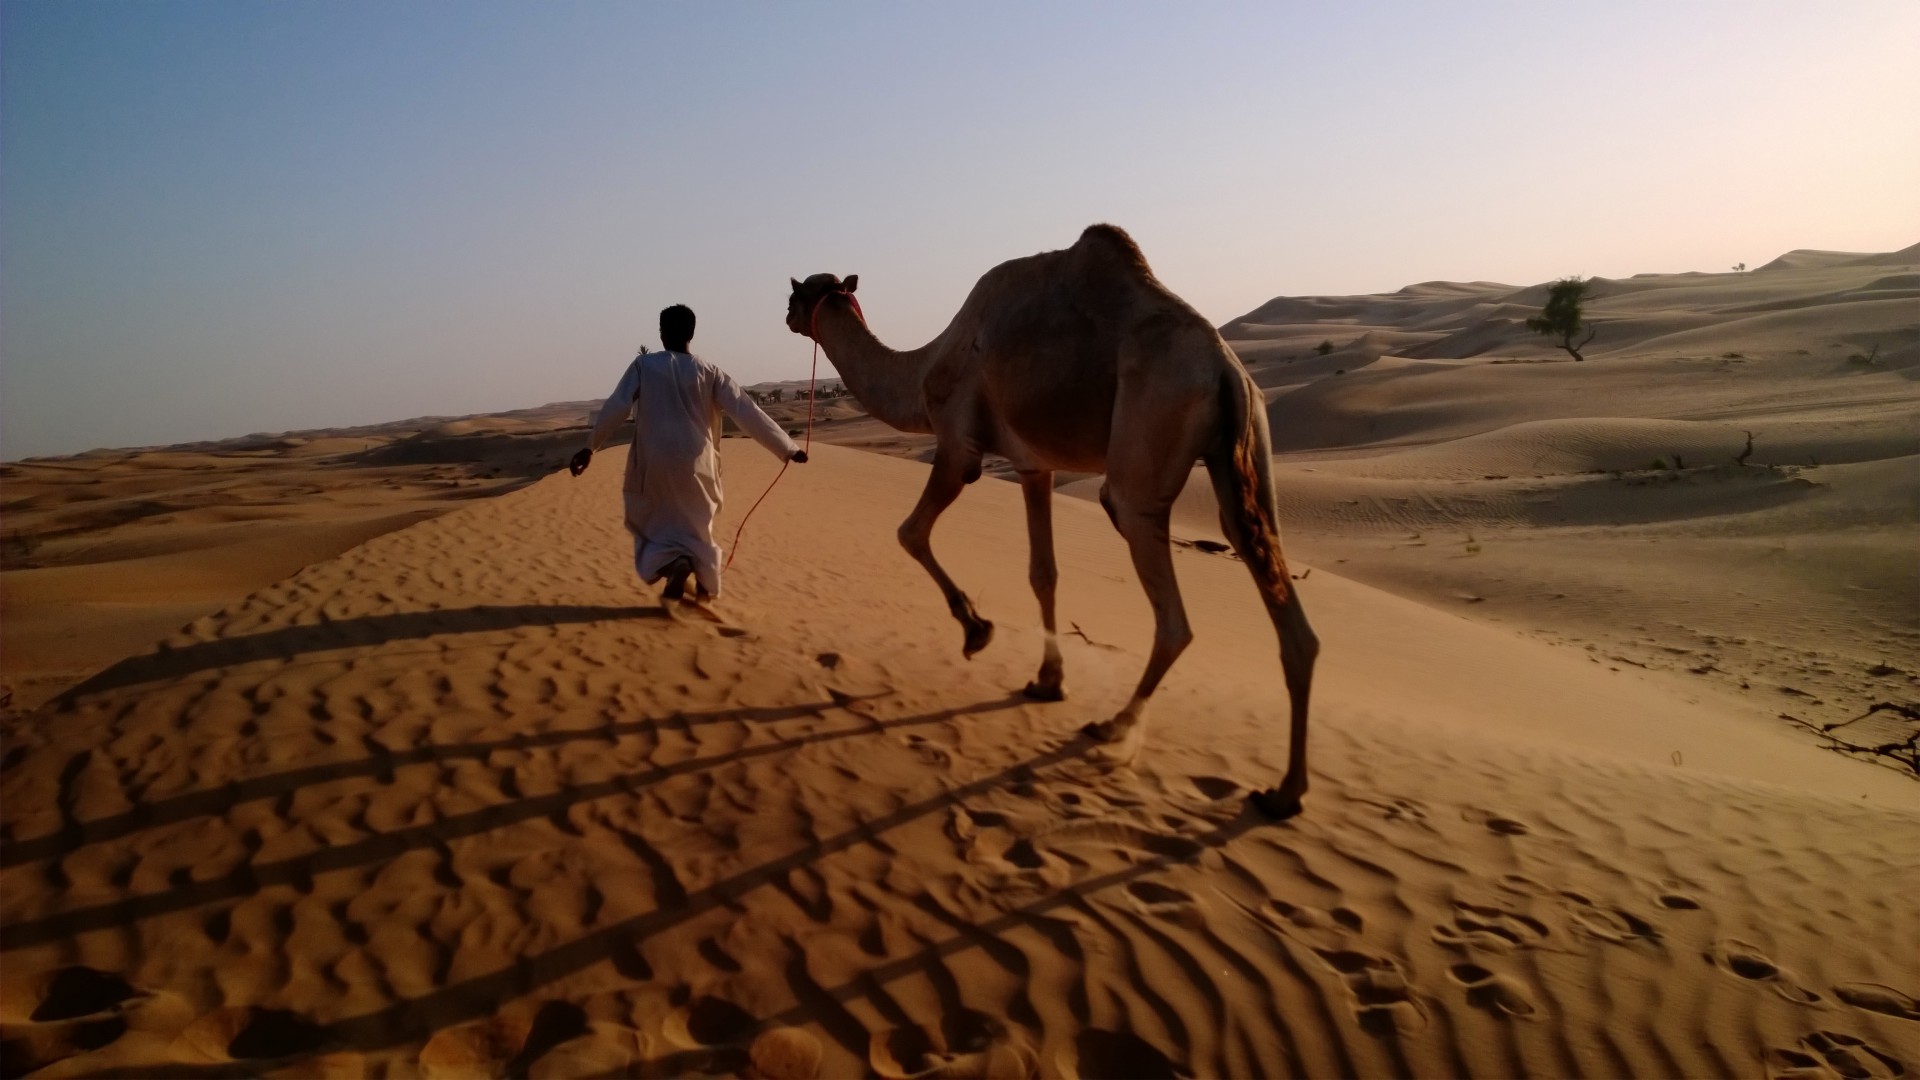 camel in desert, arabian caravan, Arabian Nights Village, Nokia Lumia test, Abu Dhabi tourism (horizontal)